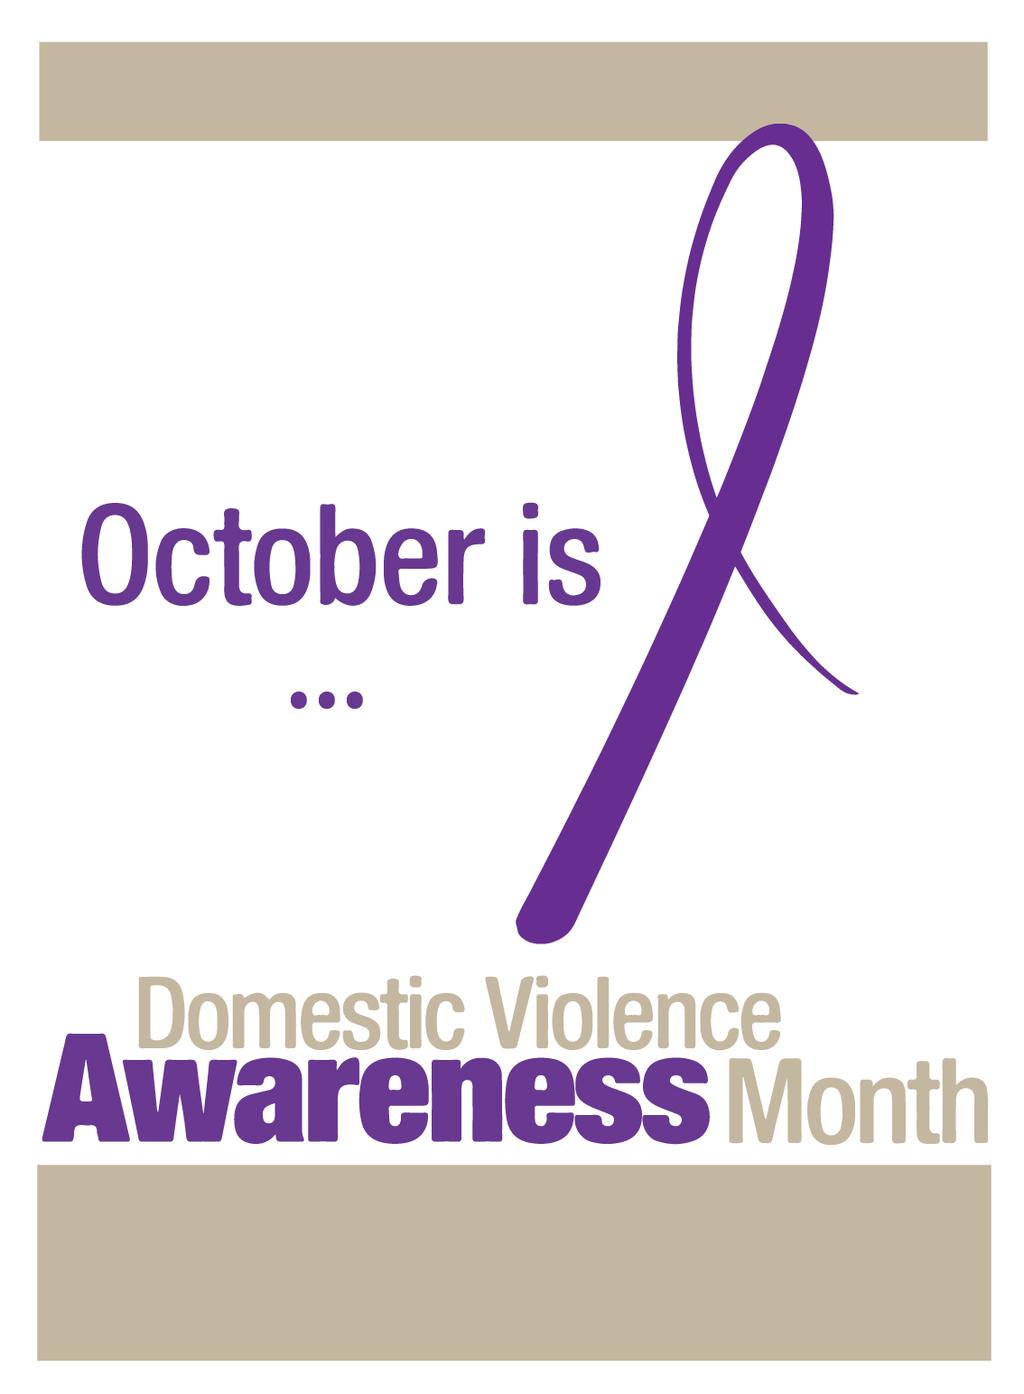 Coalition Against Domestic Violence (www.ncadv.